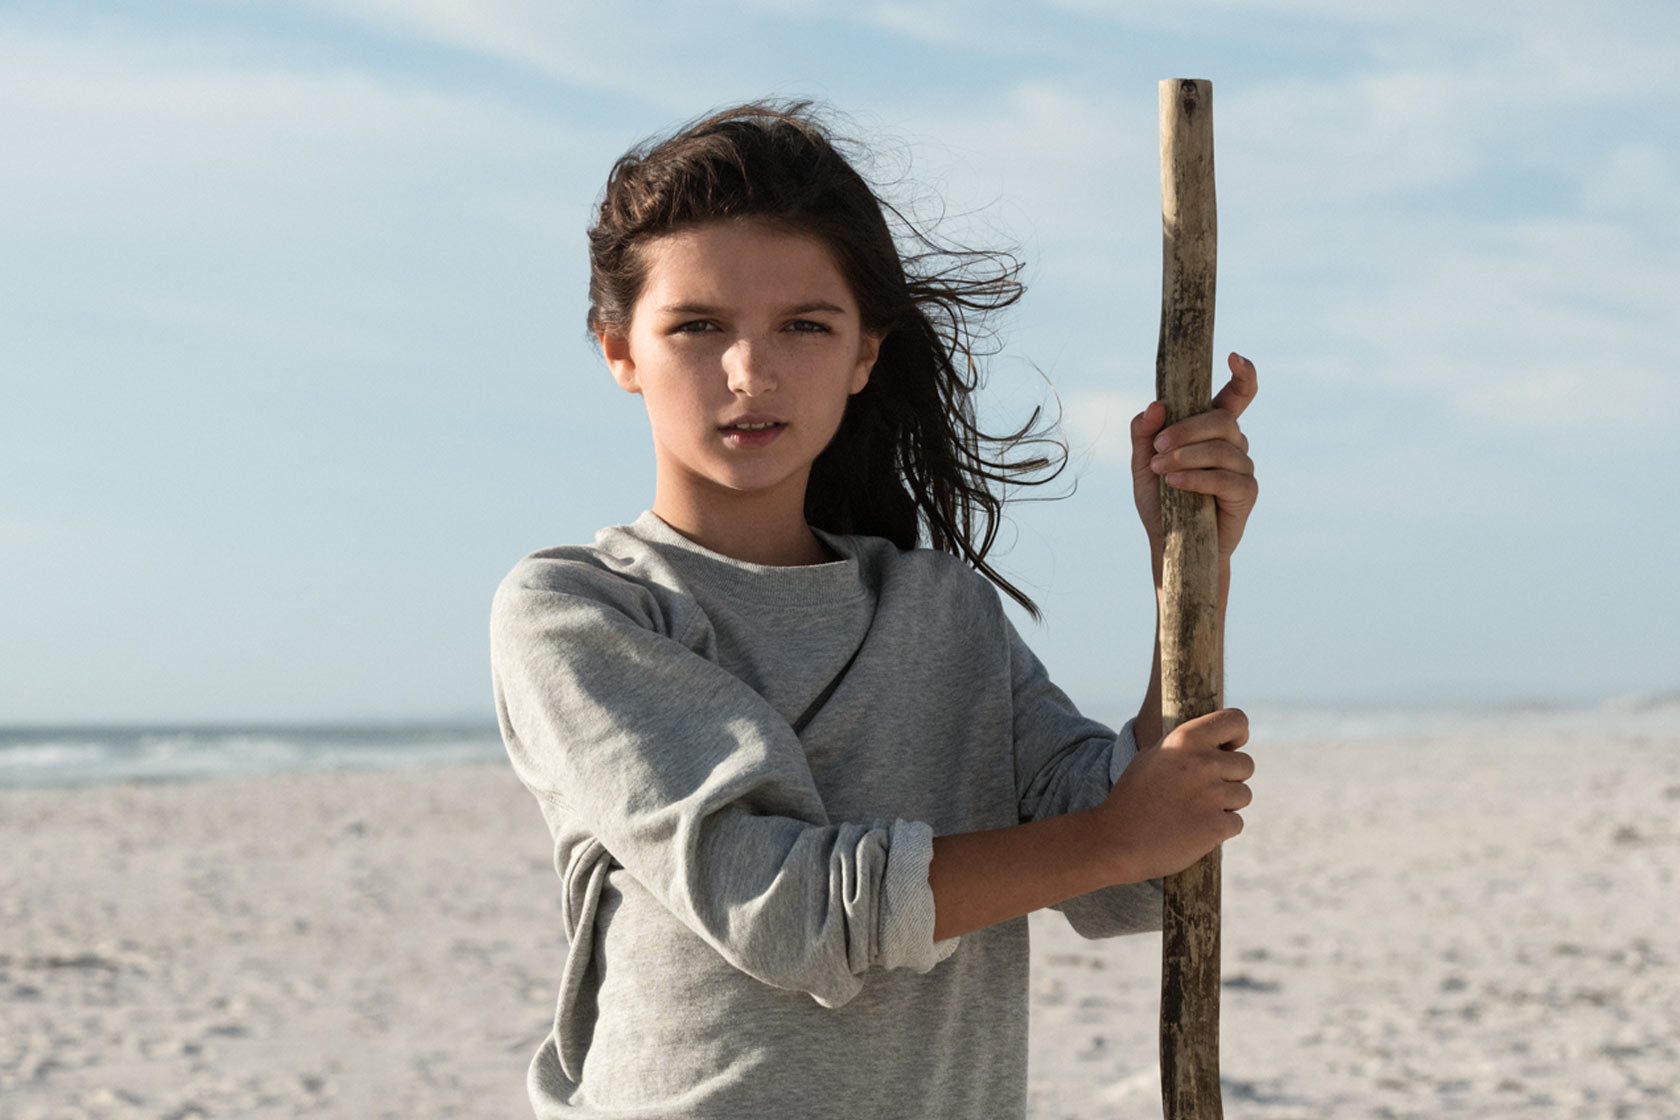 A girl on a beach holding a stick